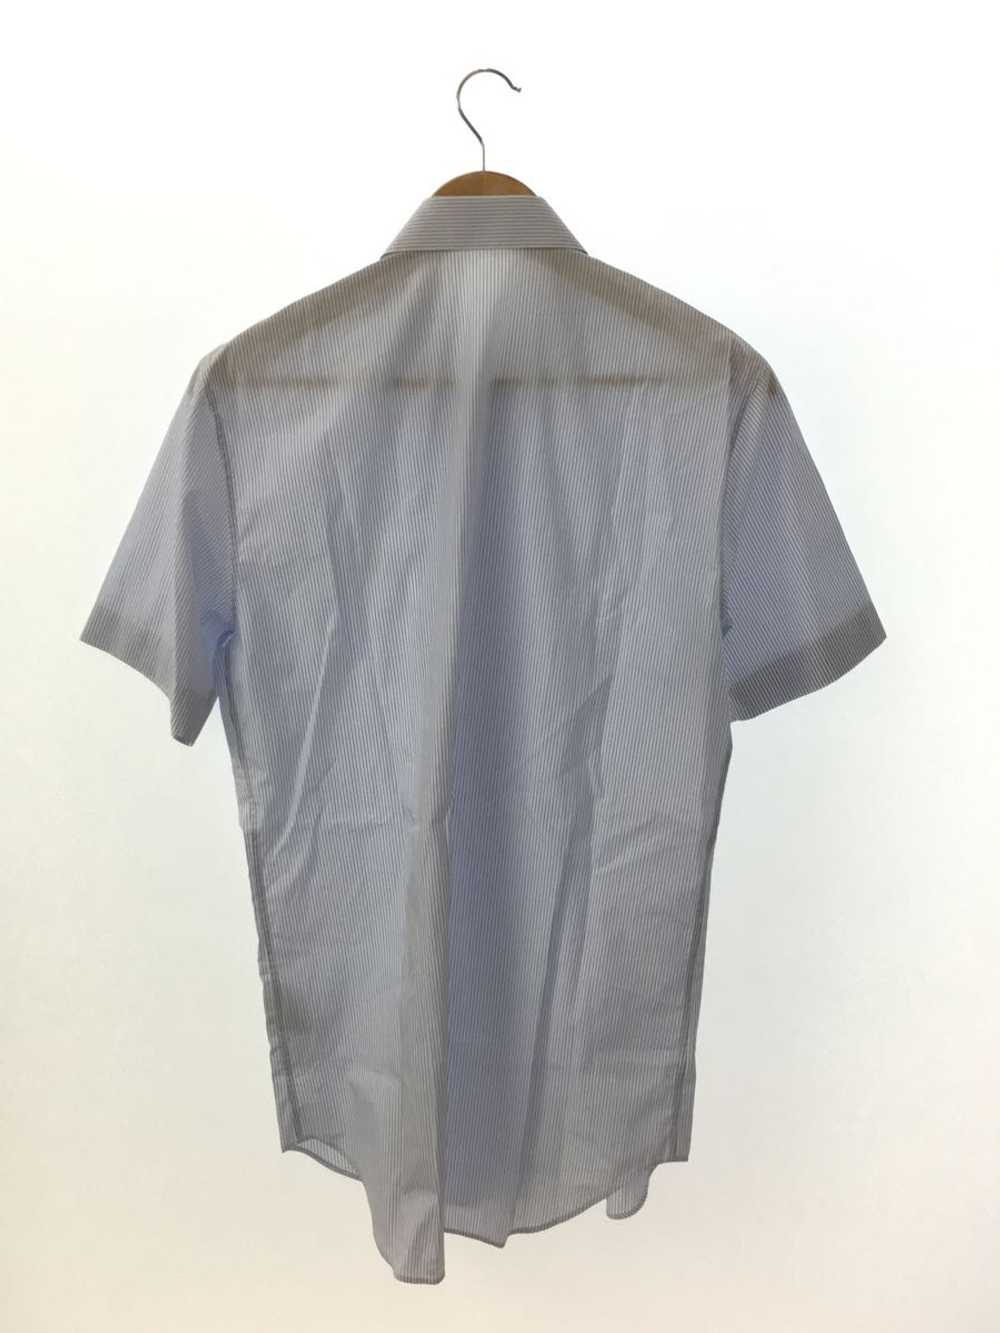 Dior Homme Short Sleeve Shirt 38 Cotton Blu Strip… - image 2